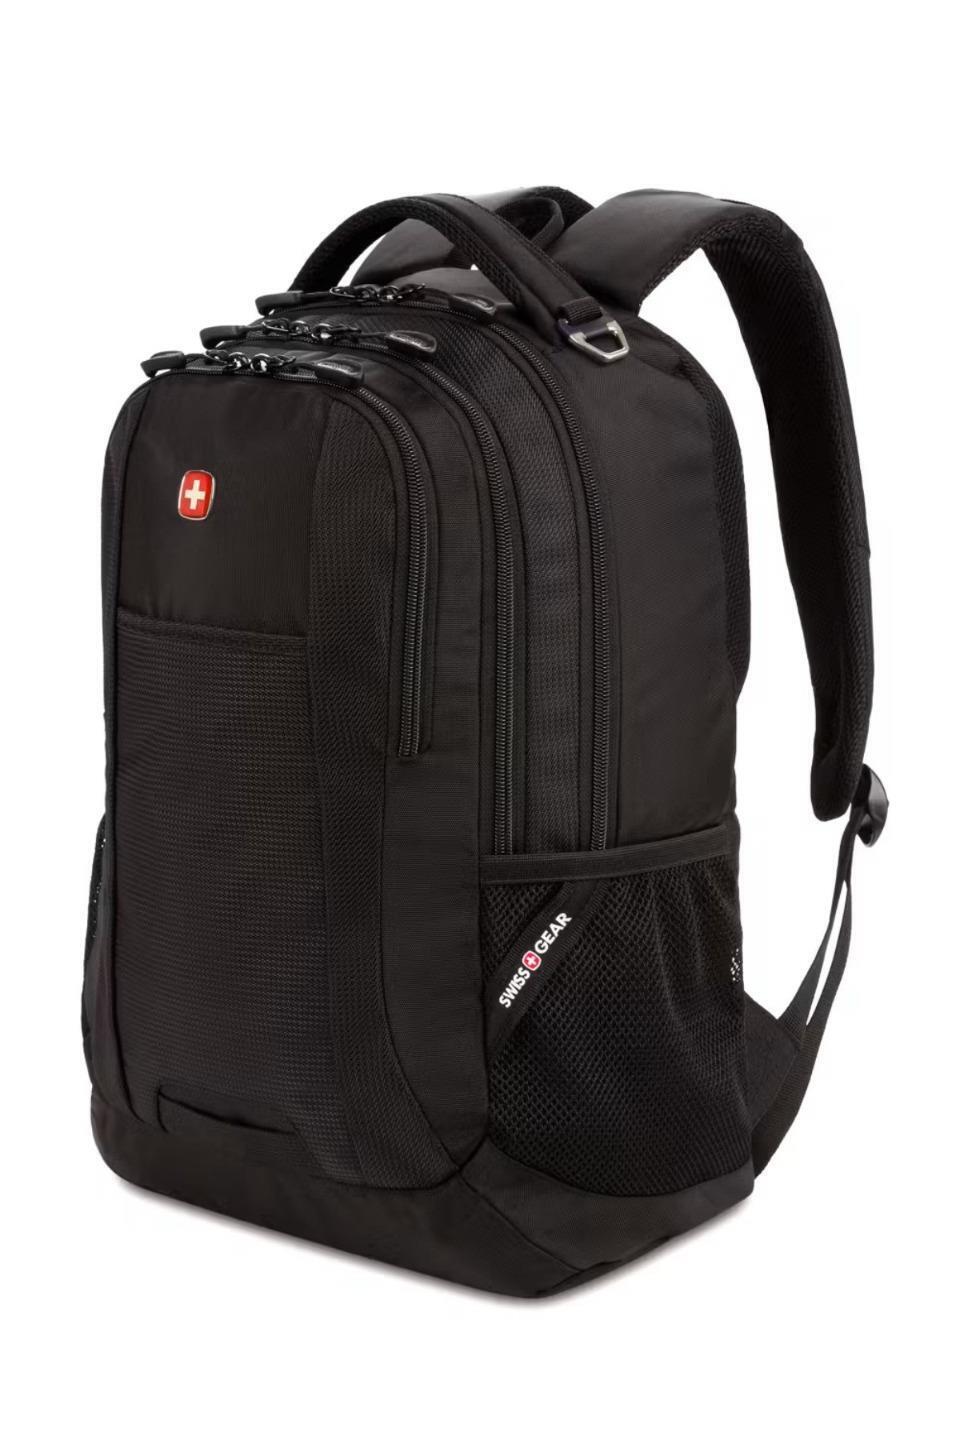 NEW SwissGear 5505 Laptop Backpack Bag, Special Edition, Black/Black, Swiss Gear